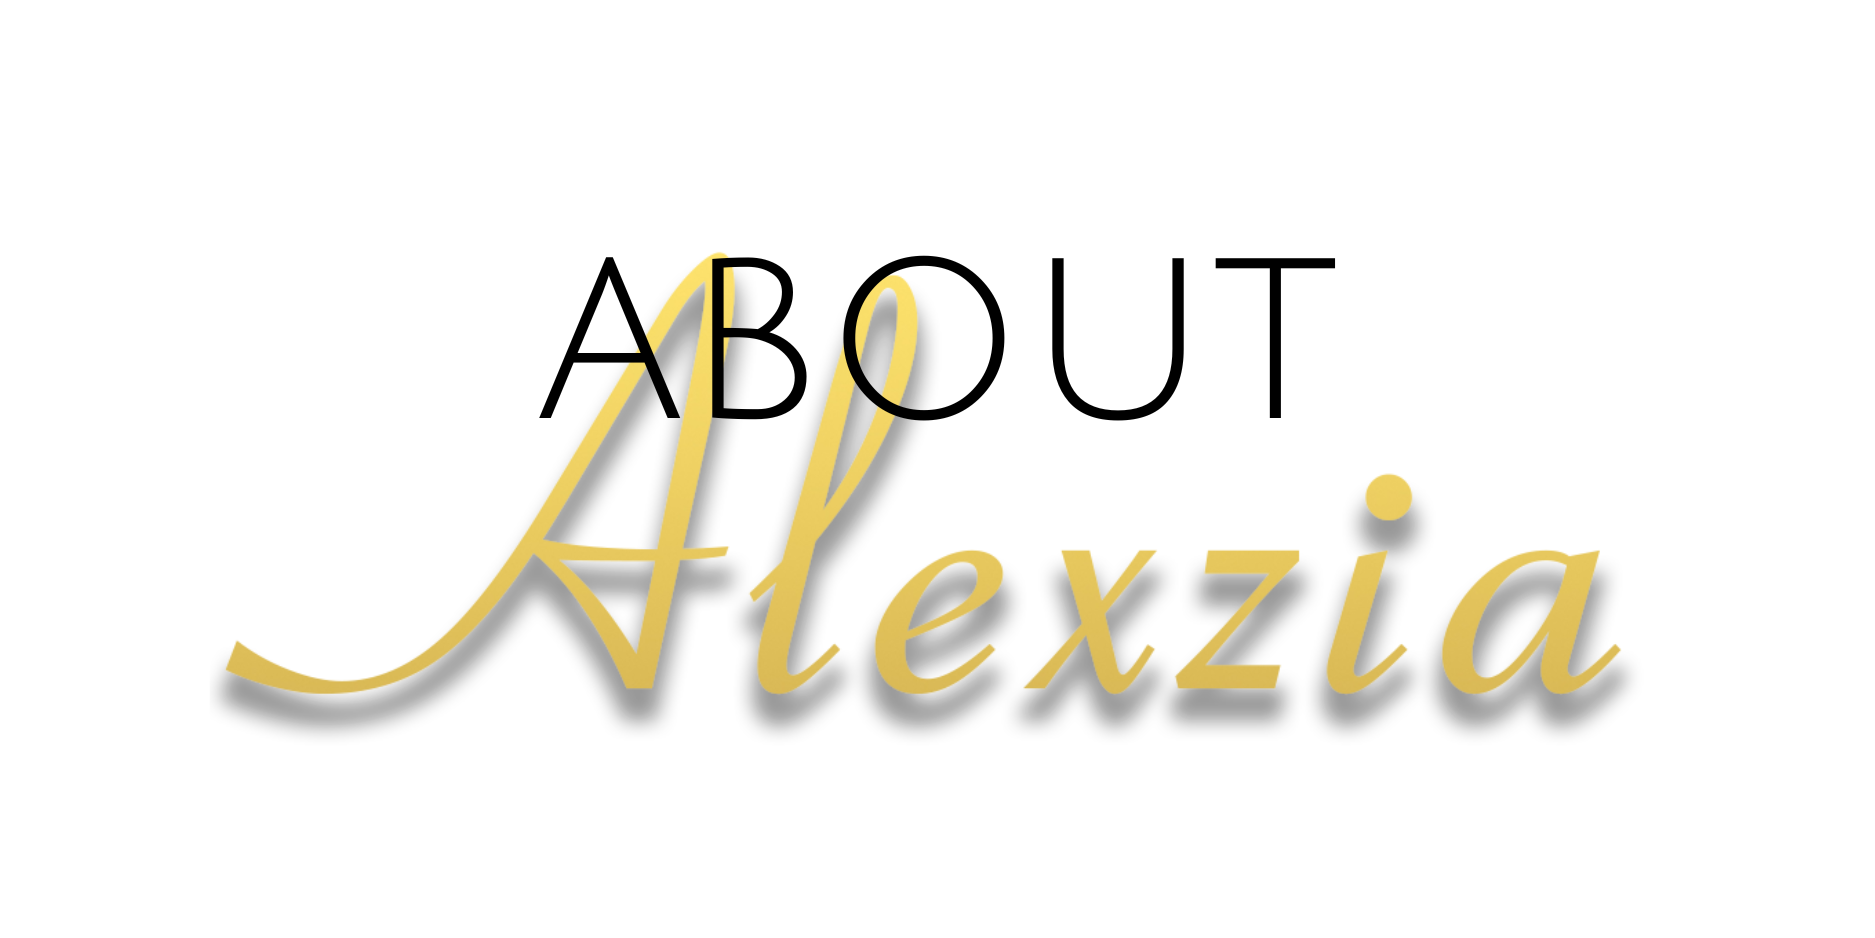 About Alexzia